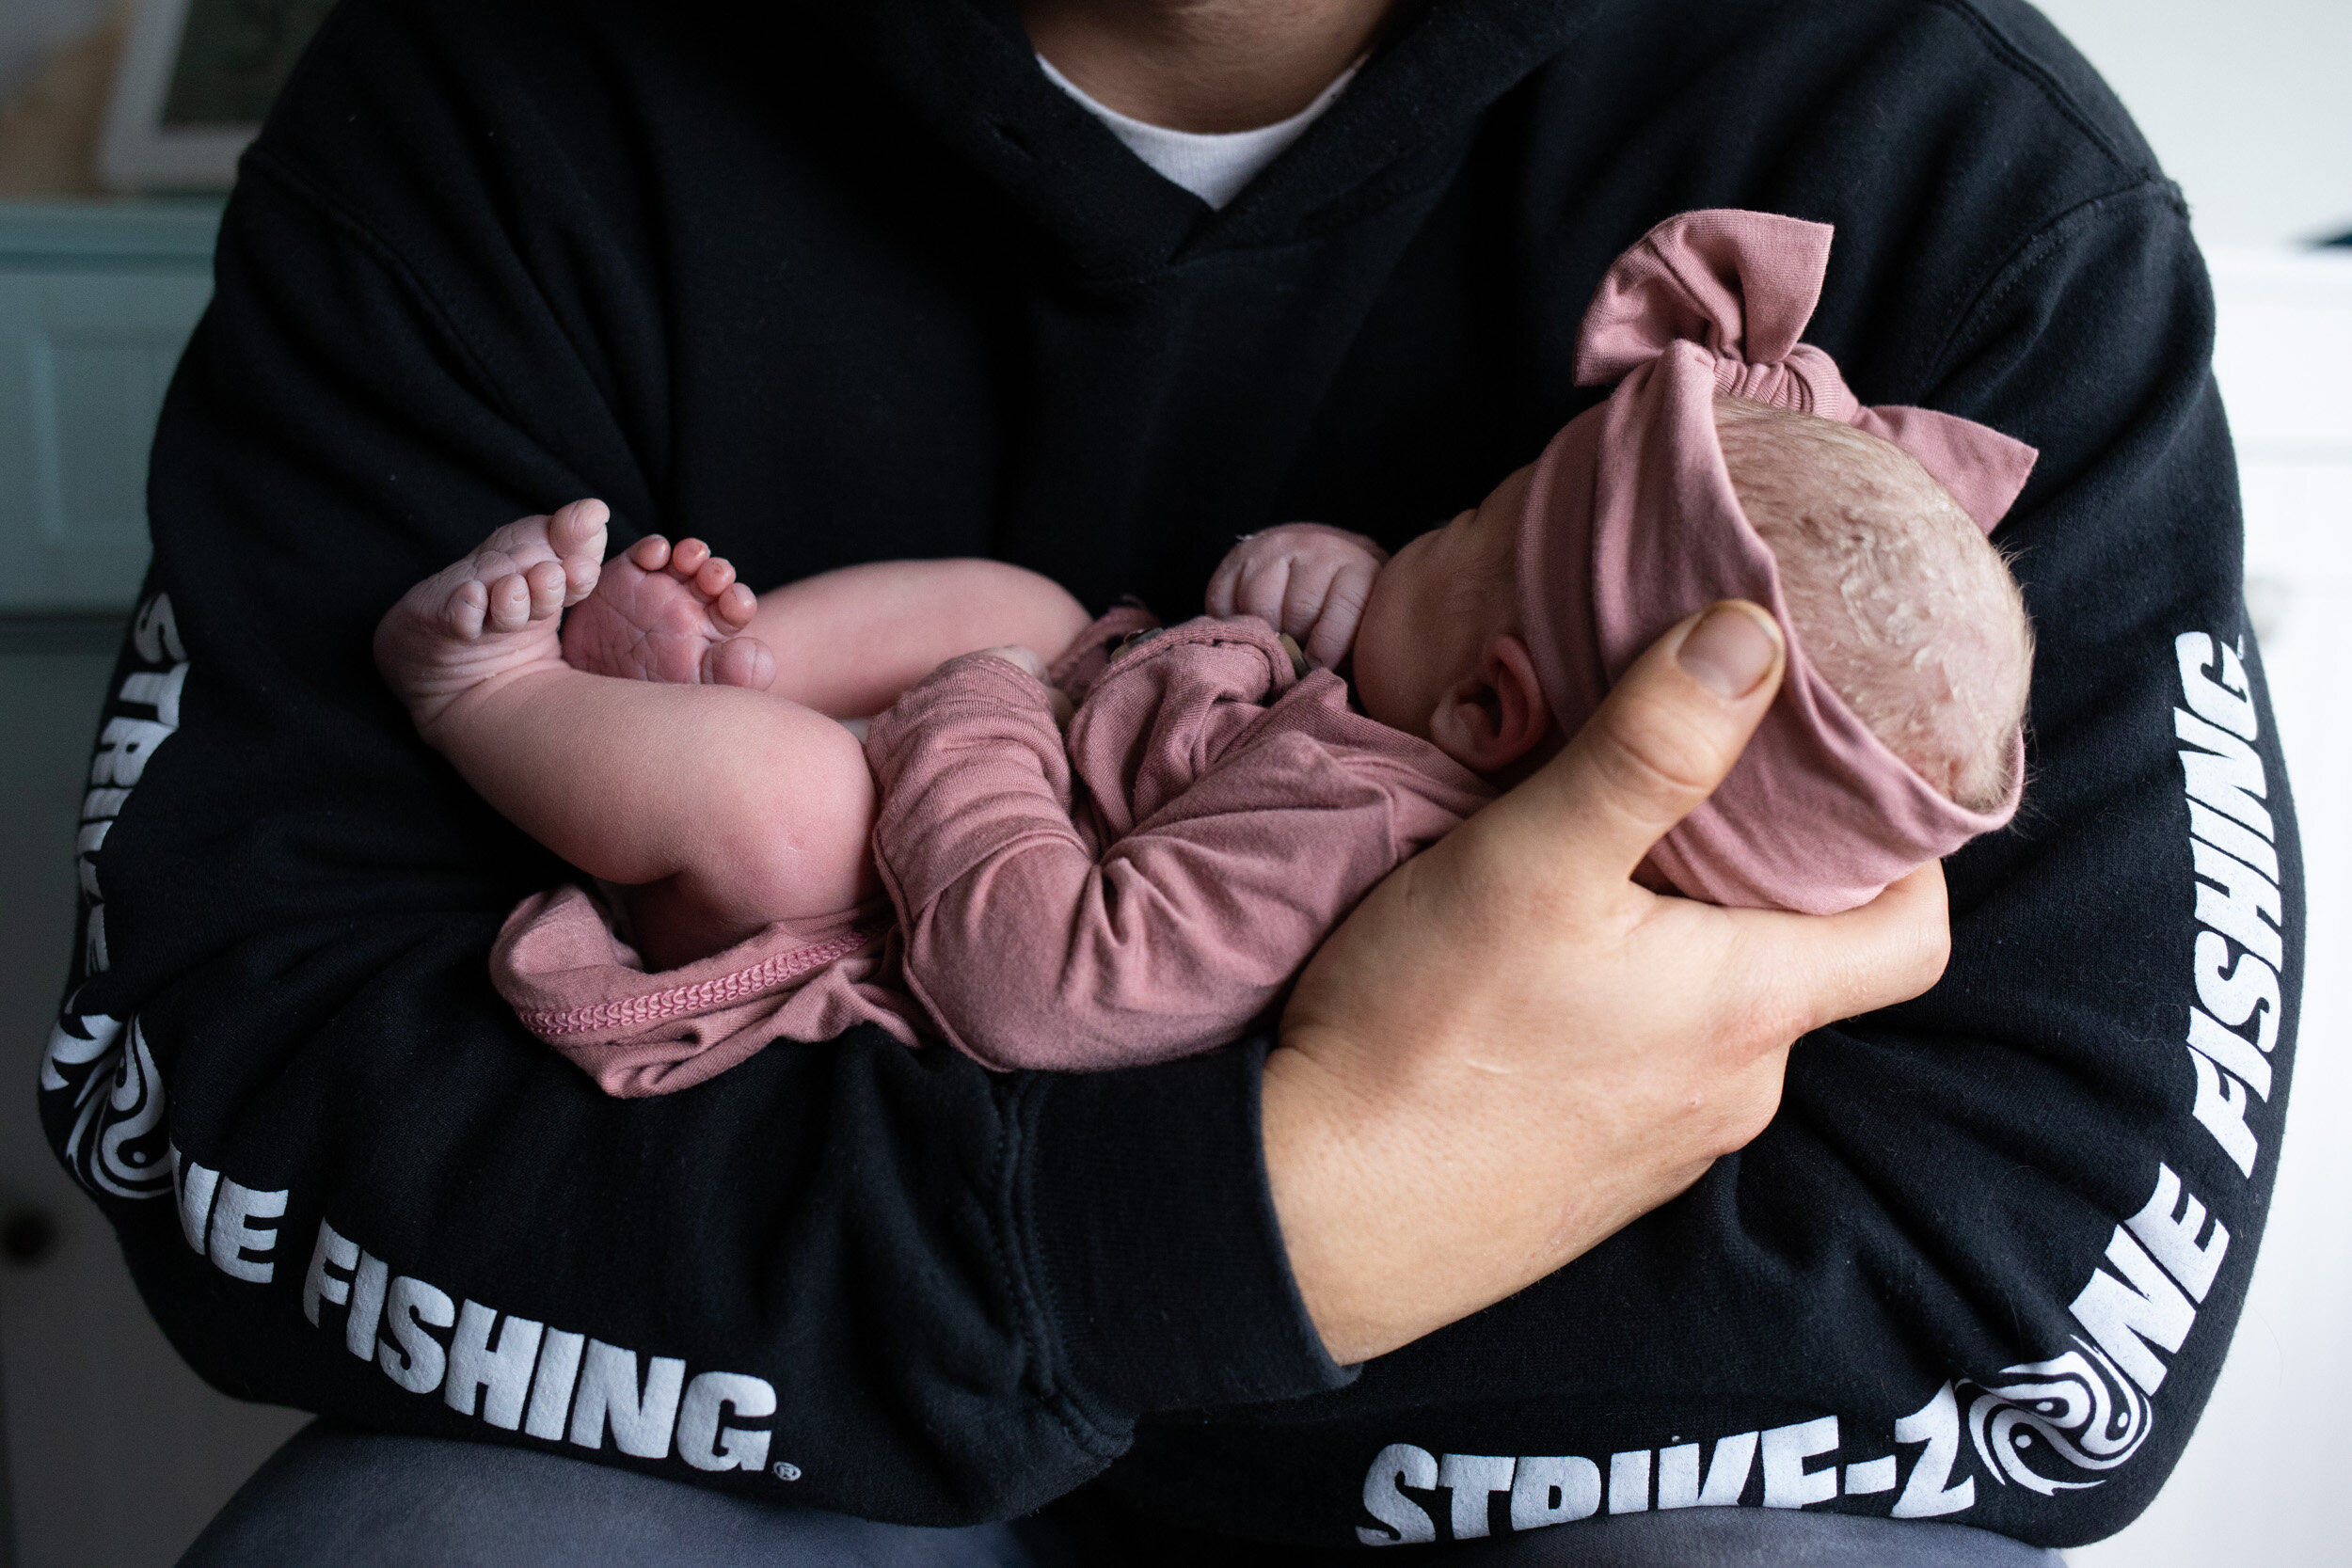 Jacksonville dad holding newborn baby girl after birth